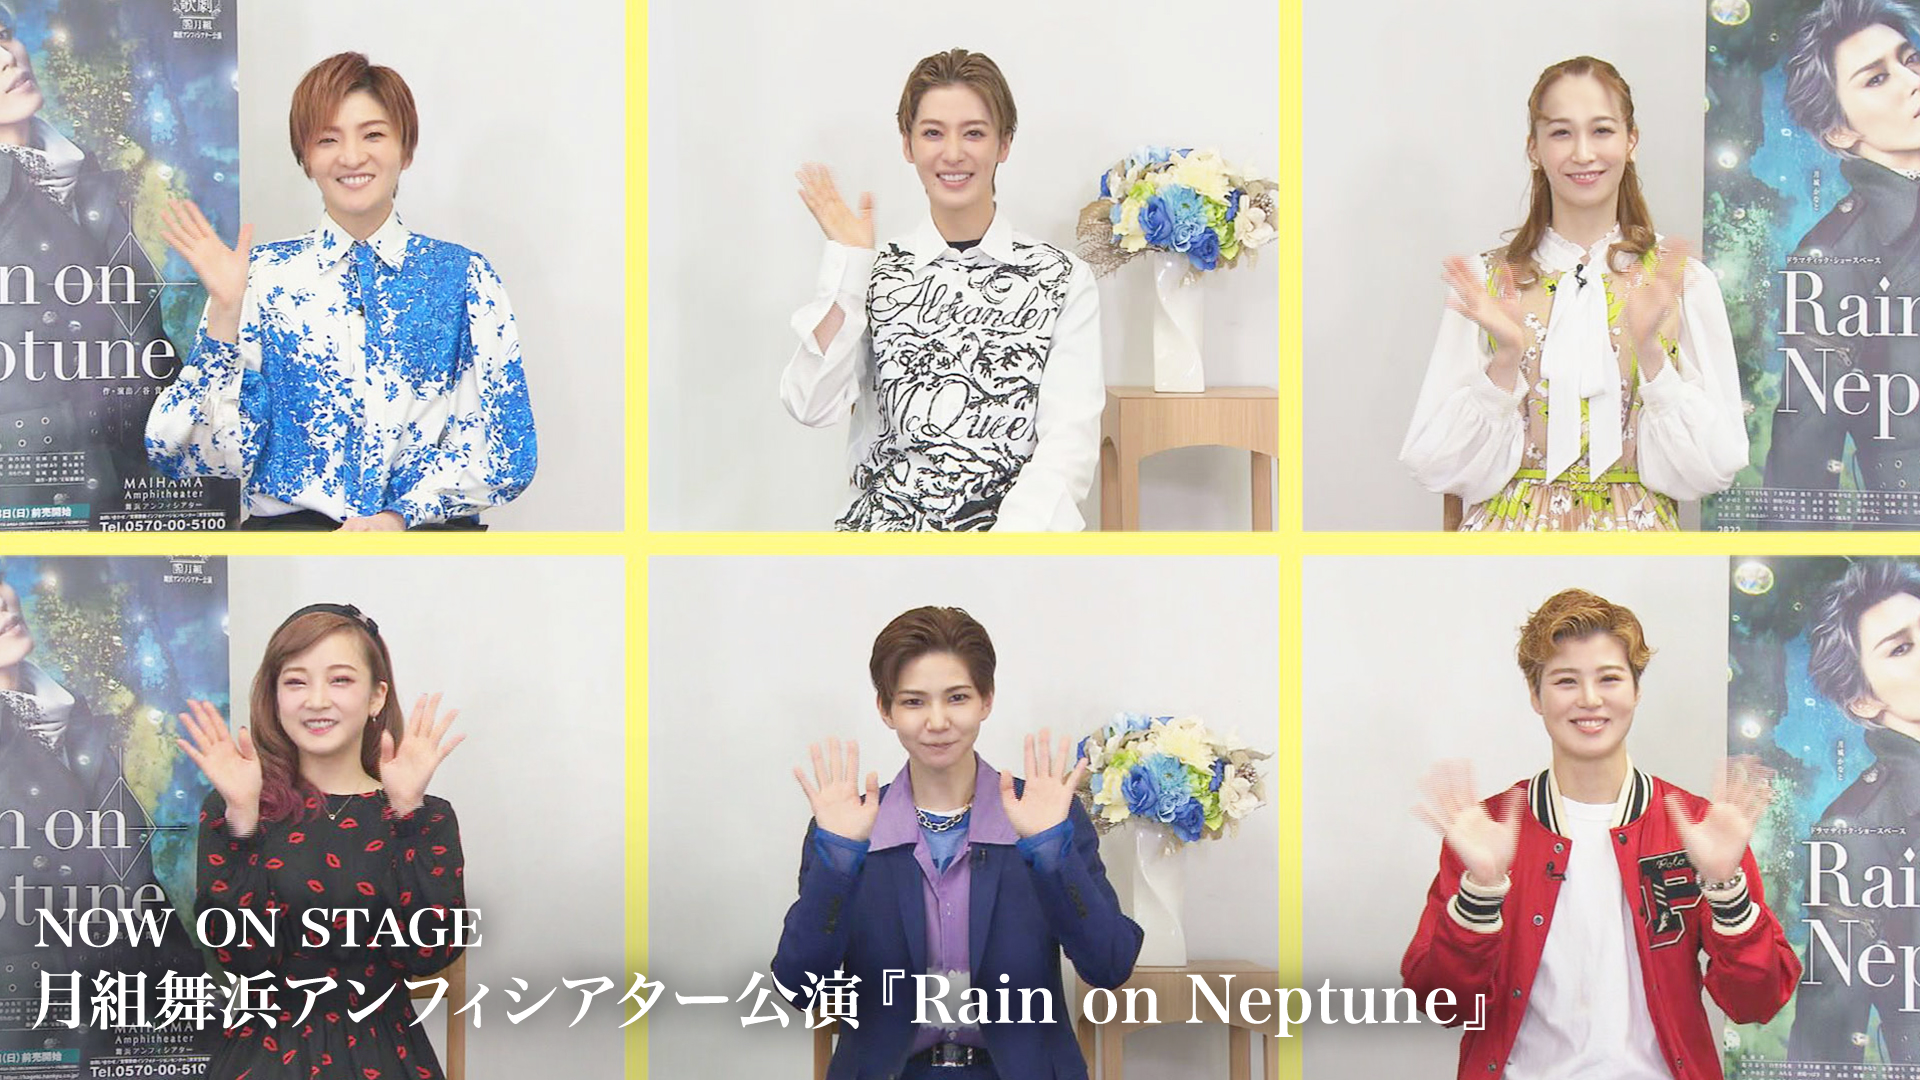 NOW ON STAGE 月組舞浜アンフィシアター公演『Rain on Neptune』(舞台 